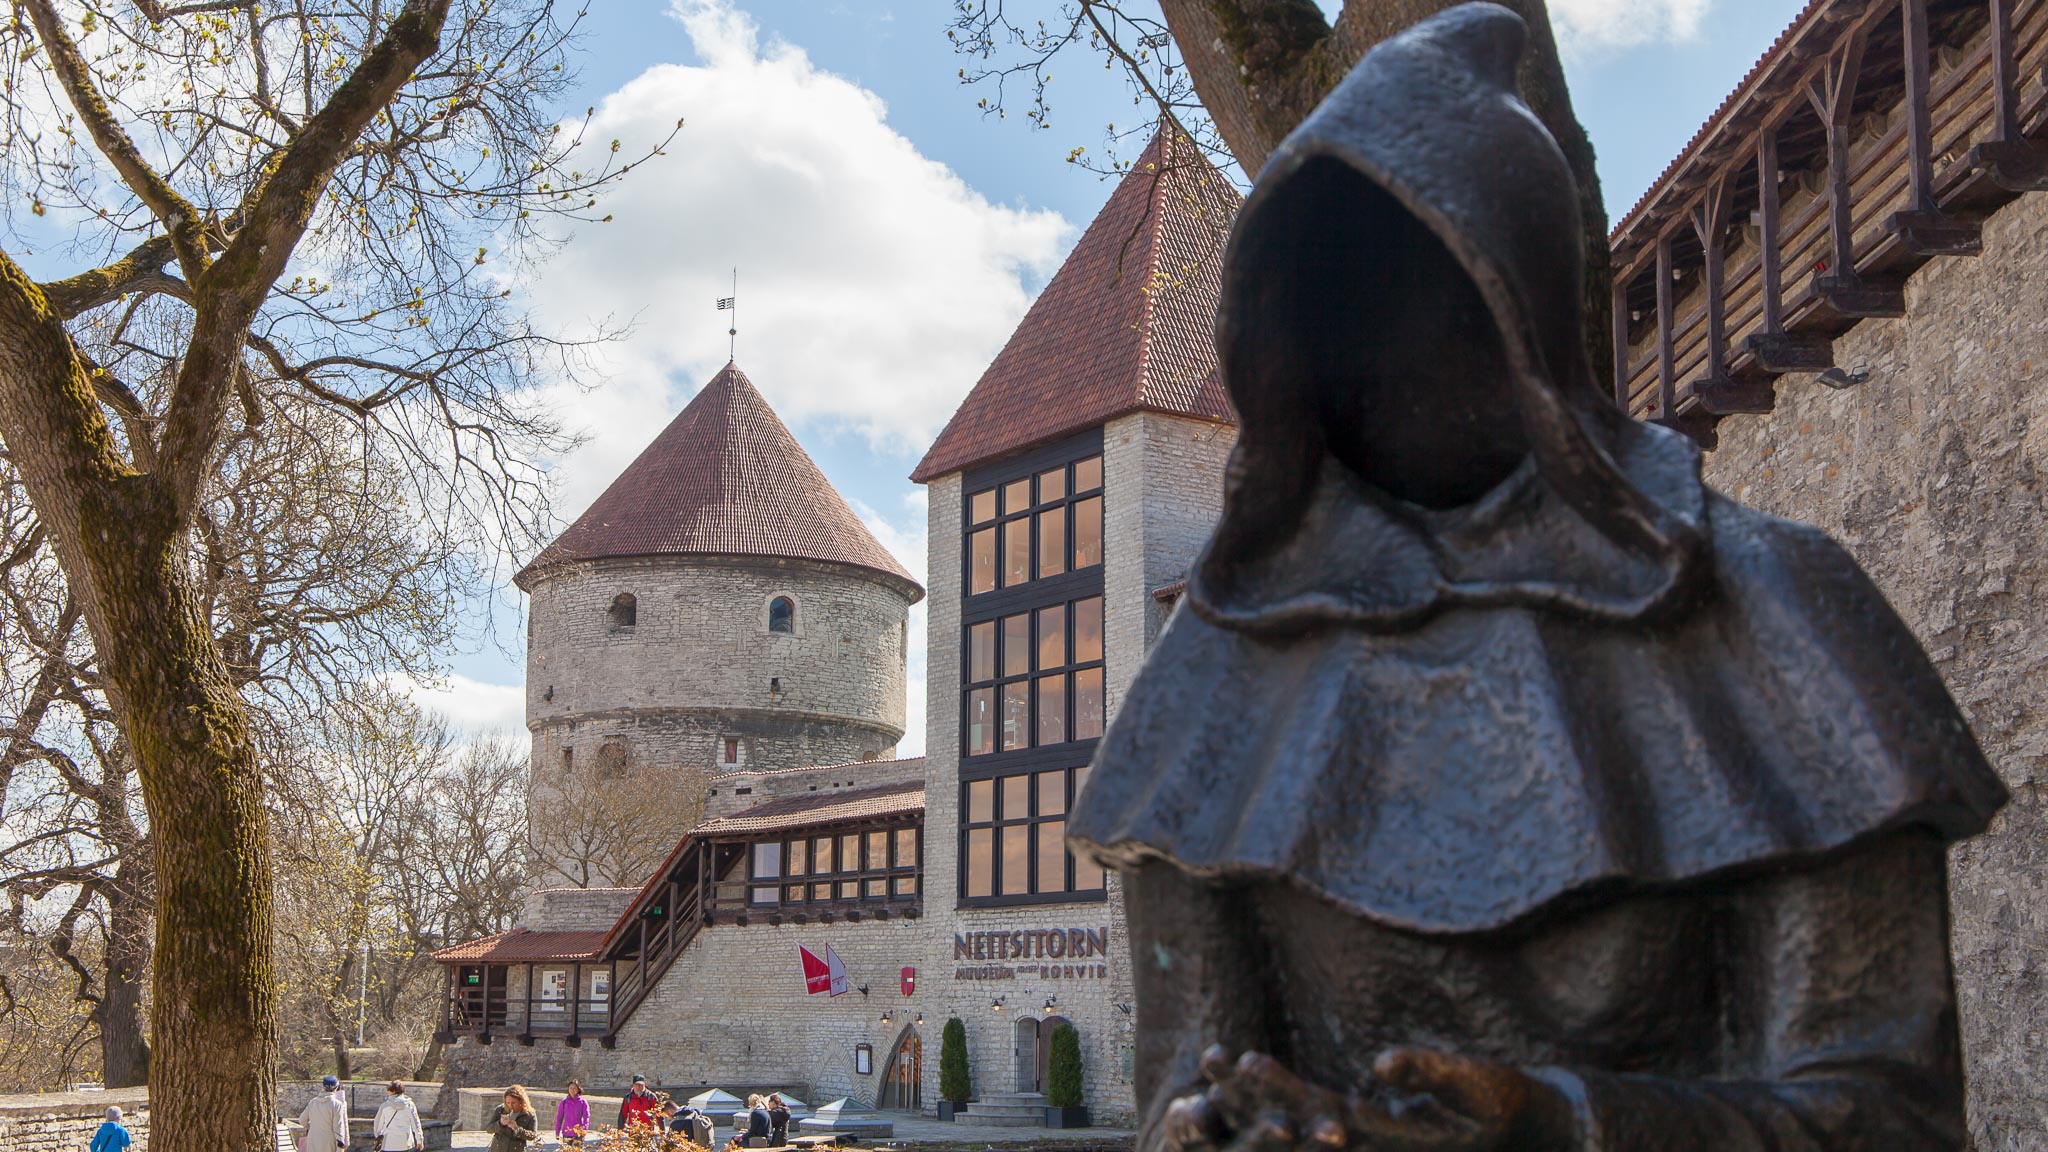 Medieval vibes in Tallinn